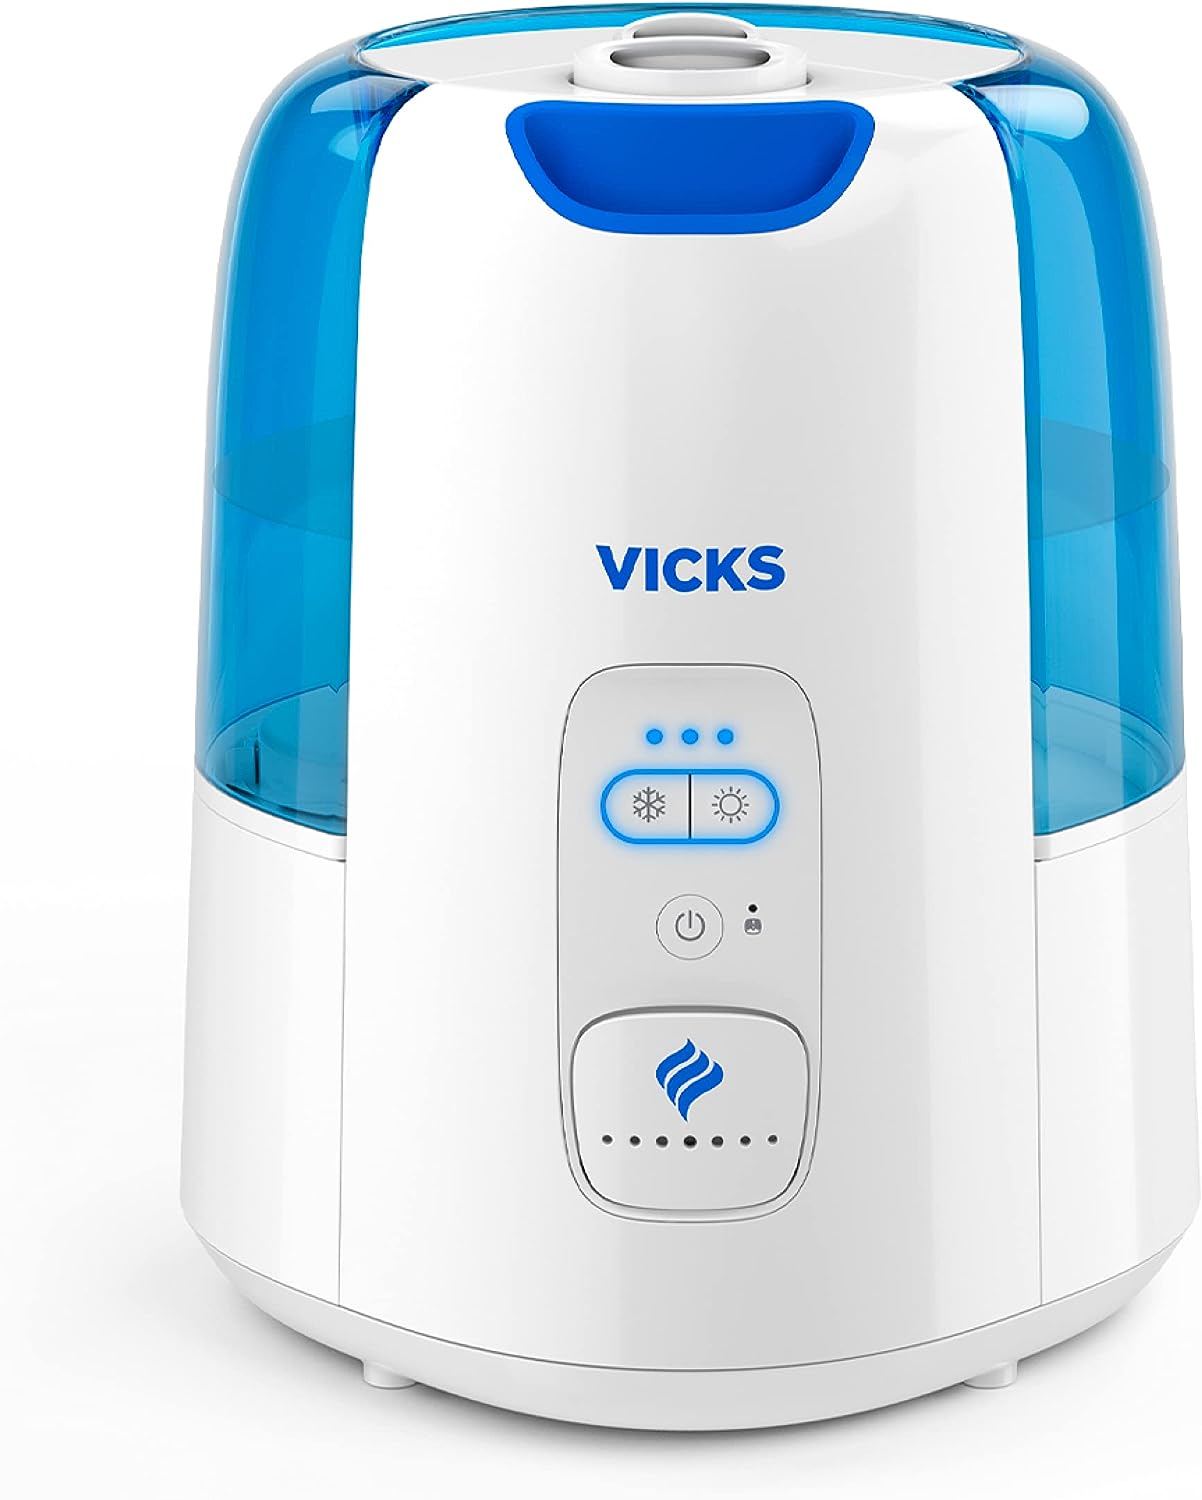 Best Vicks Humidifier?: Vicks Dual Comfort Mist Humidifier Review post thumbnail image